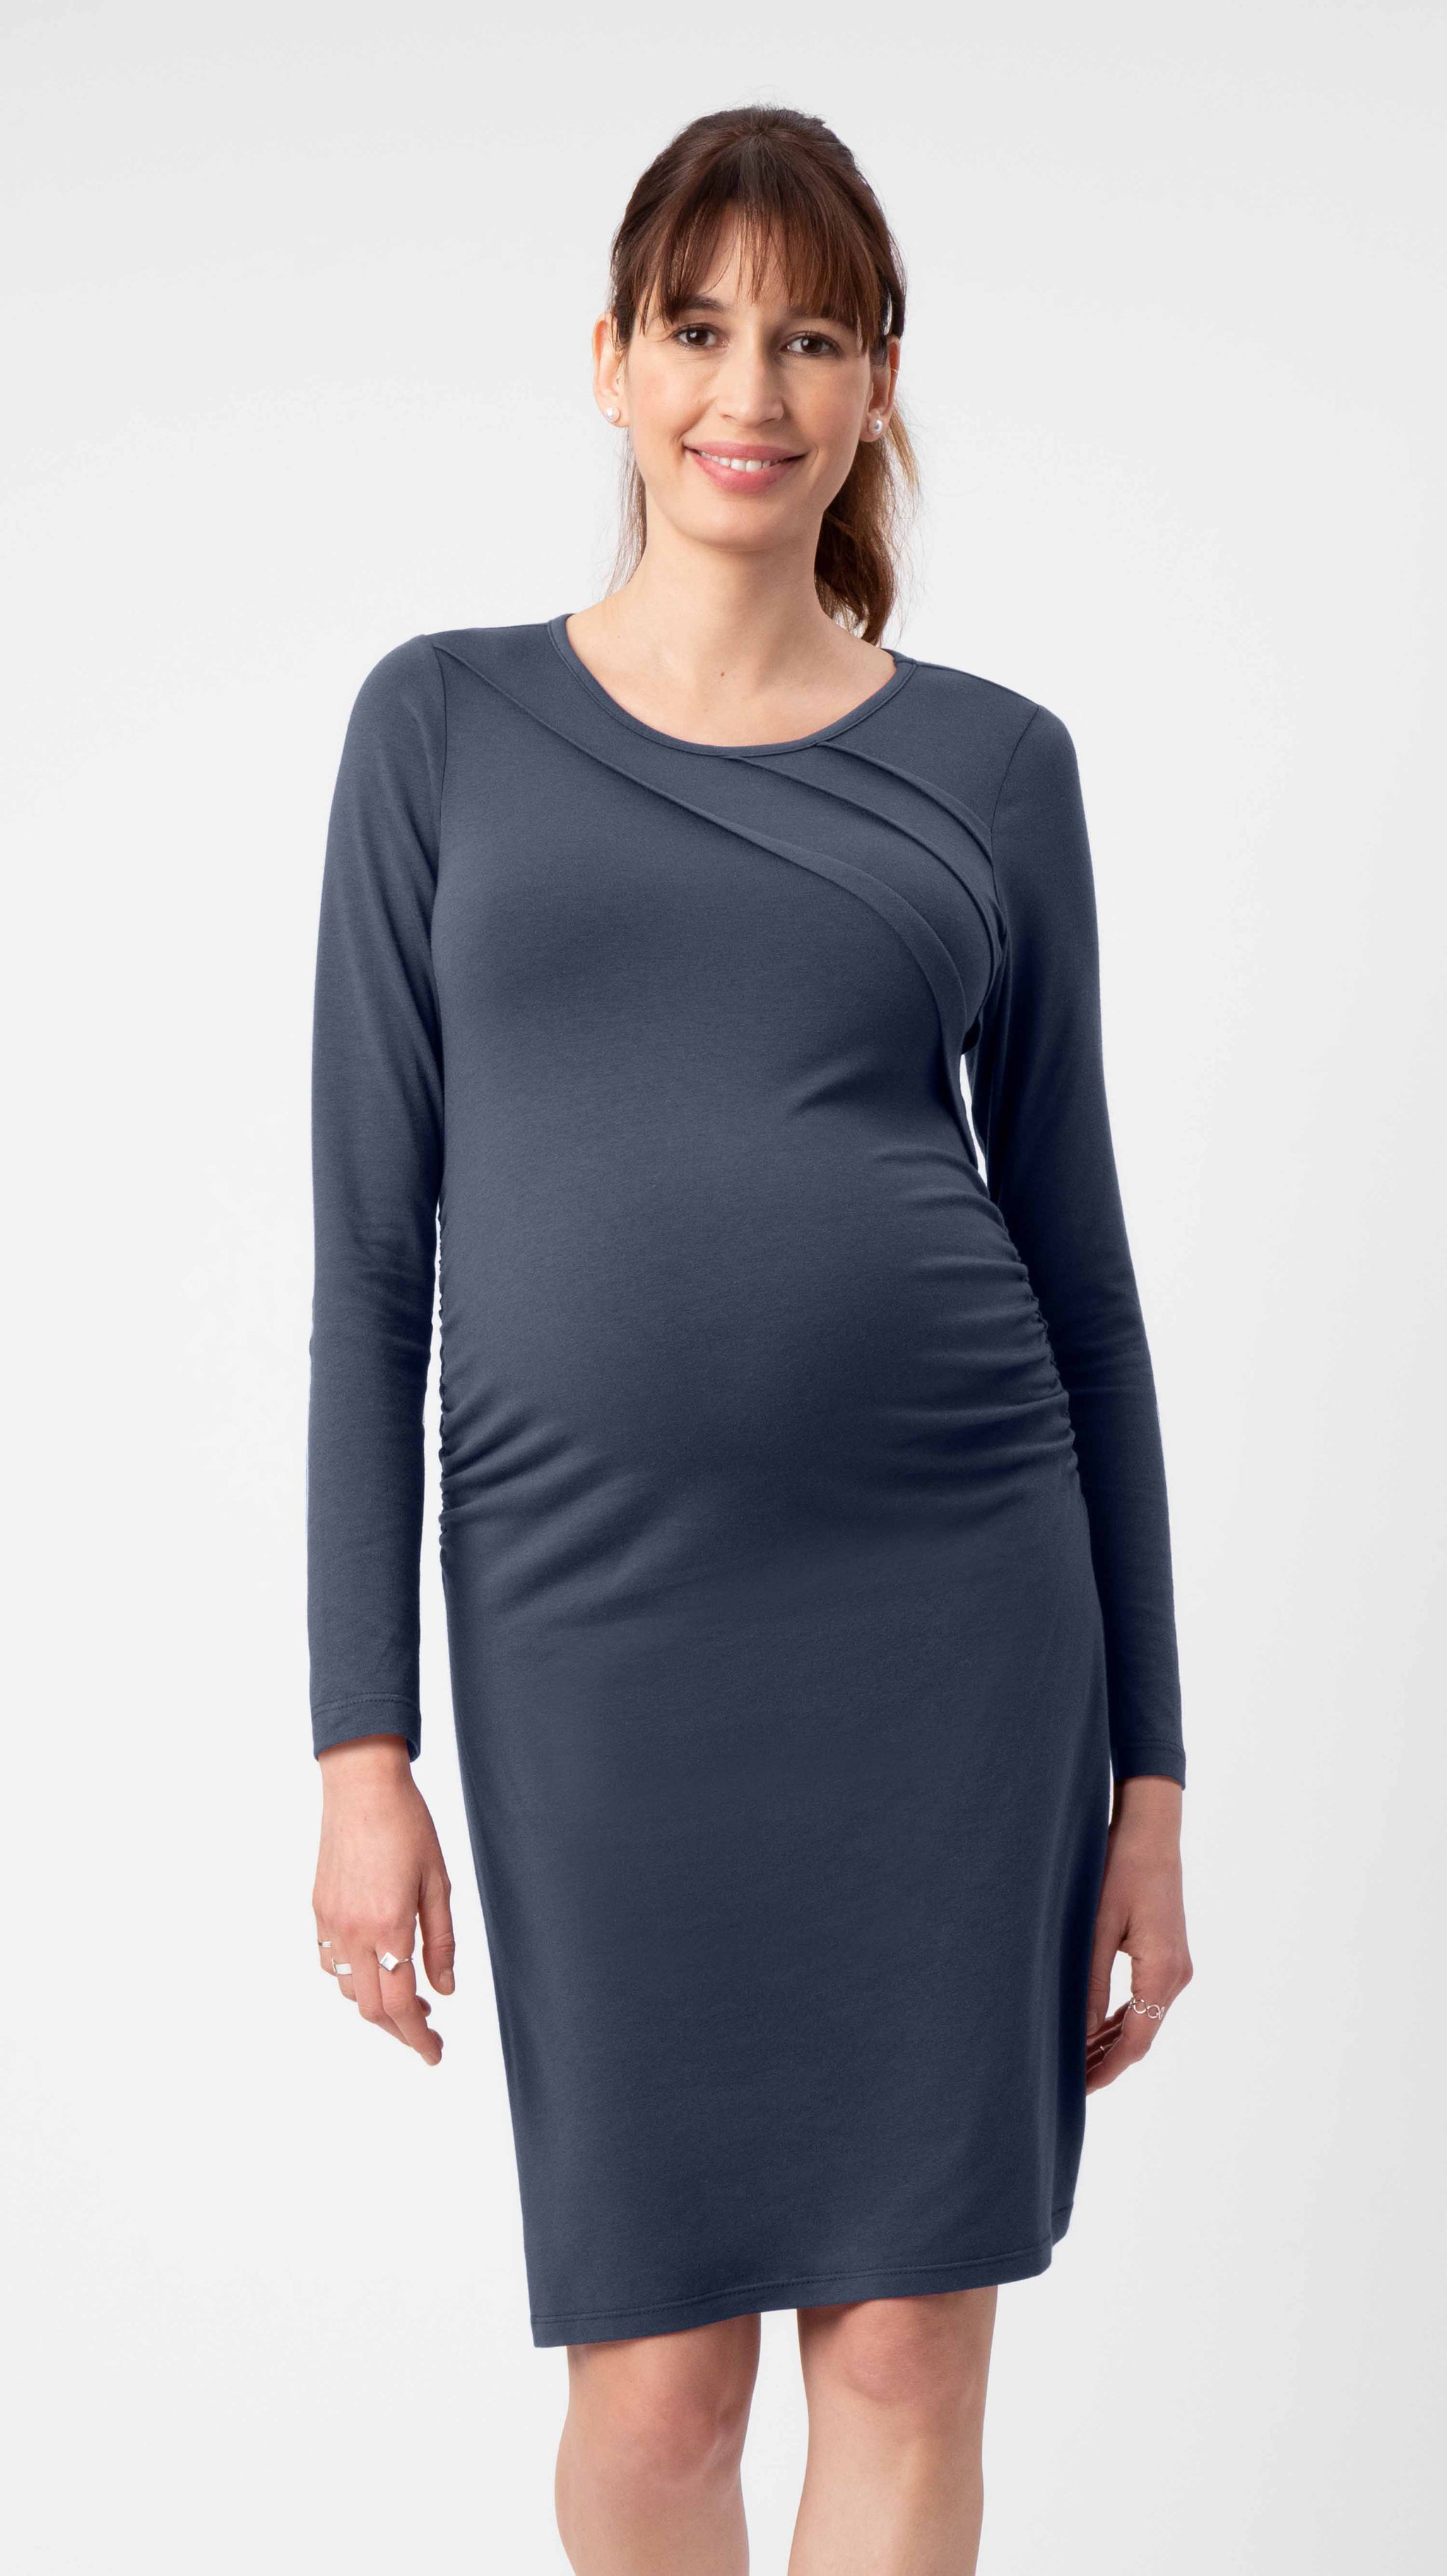 Sunburst Maternity Dress | Trendy Maternity Clothes | Stowaway Collection